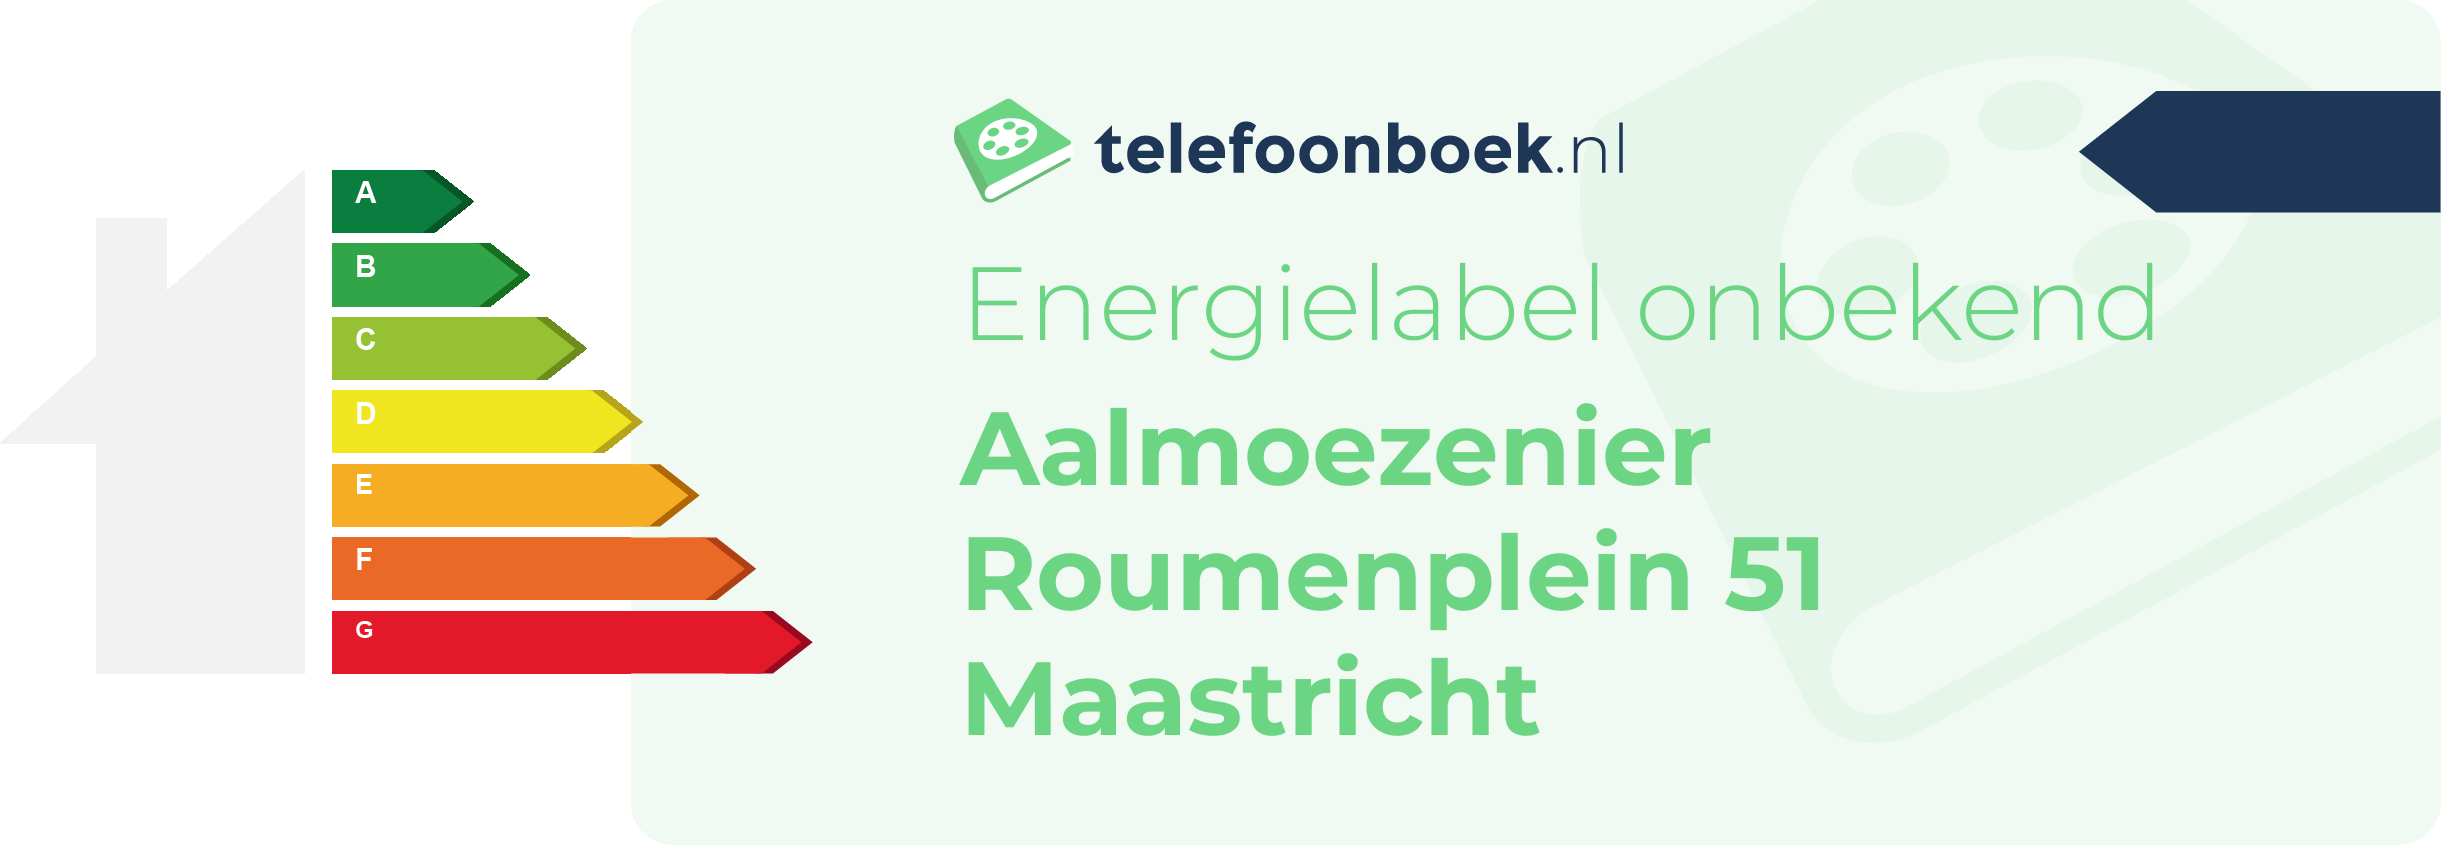 Energielabel Aalmoezenier Roumenplein 51 Maastricht